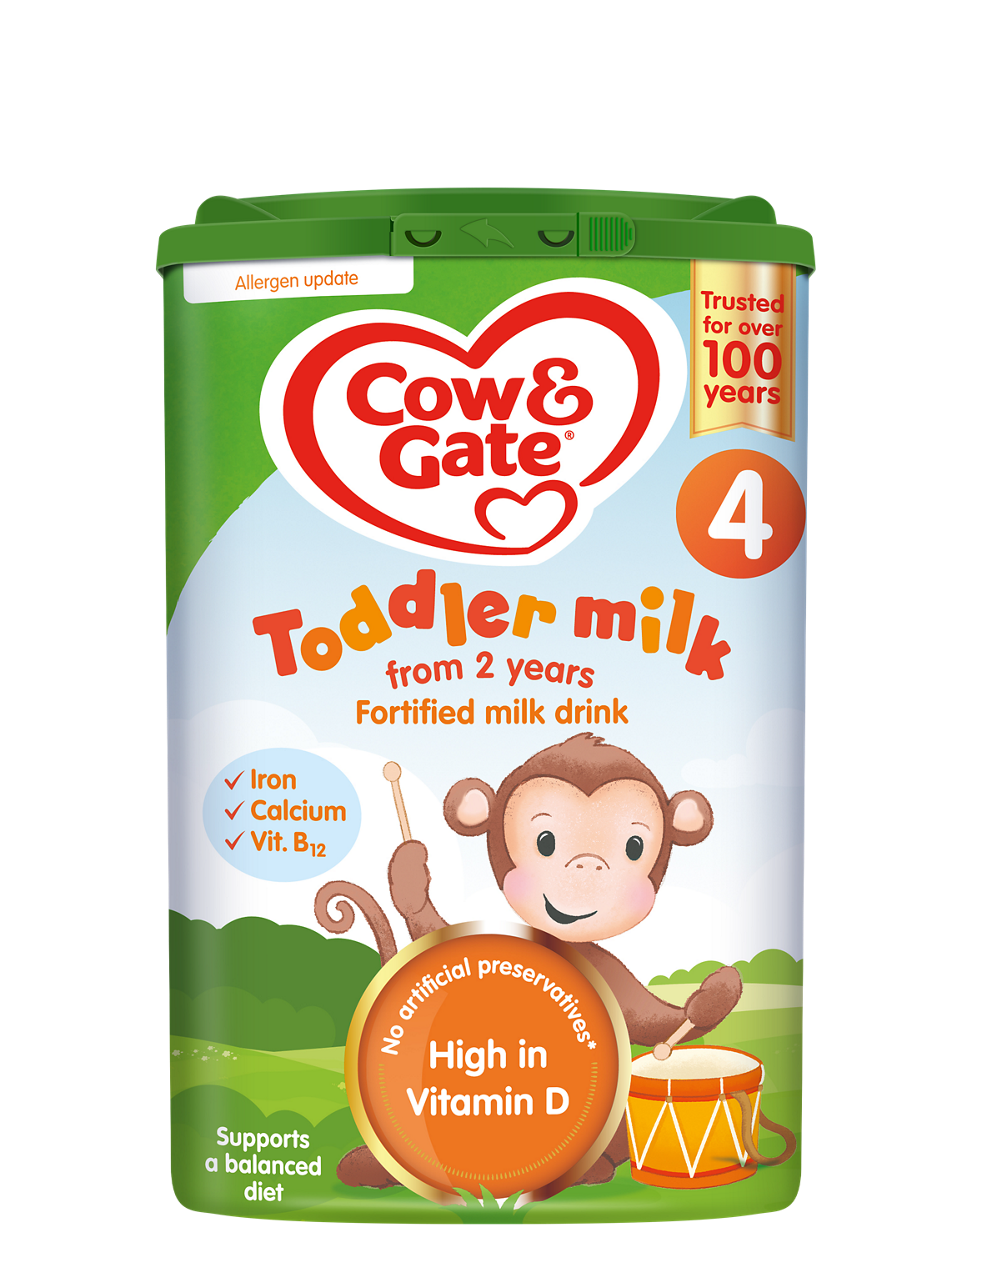 en-GB,Cow & Gate Toddler Milk (2-3 years) (Powder)